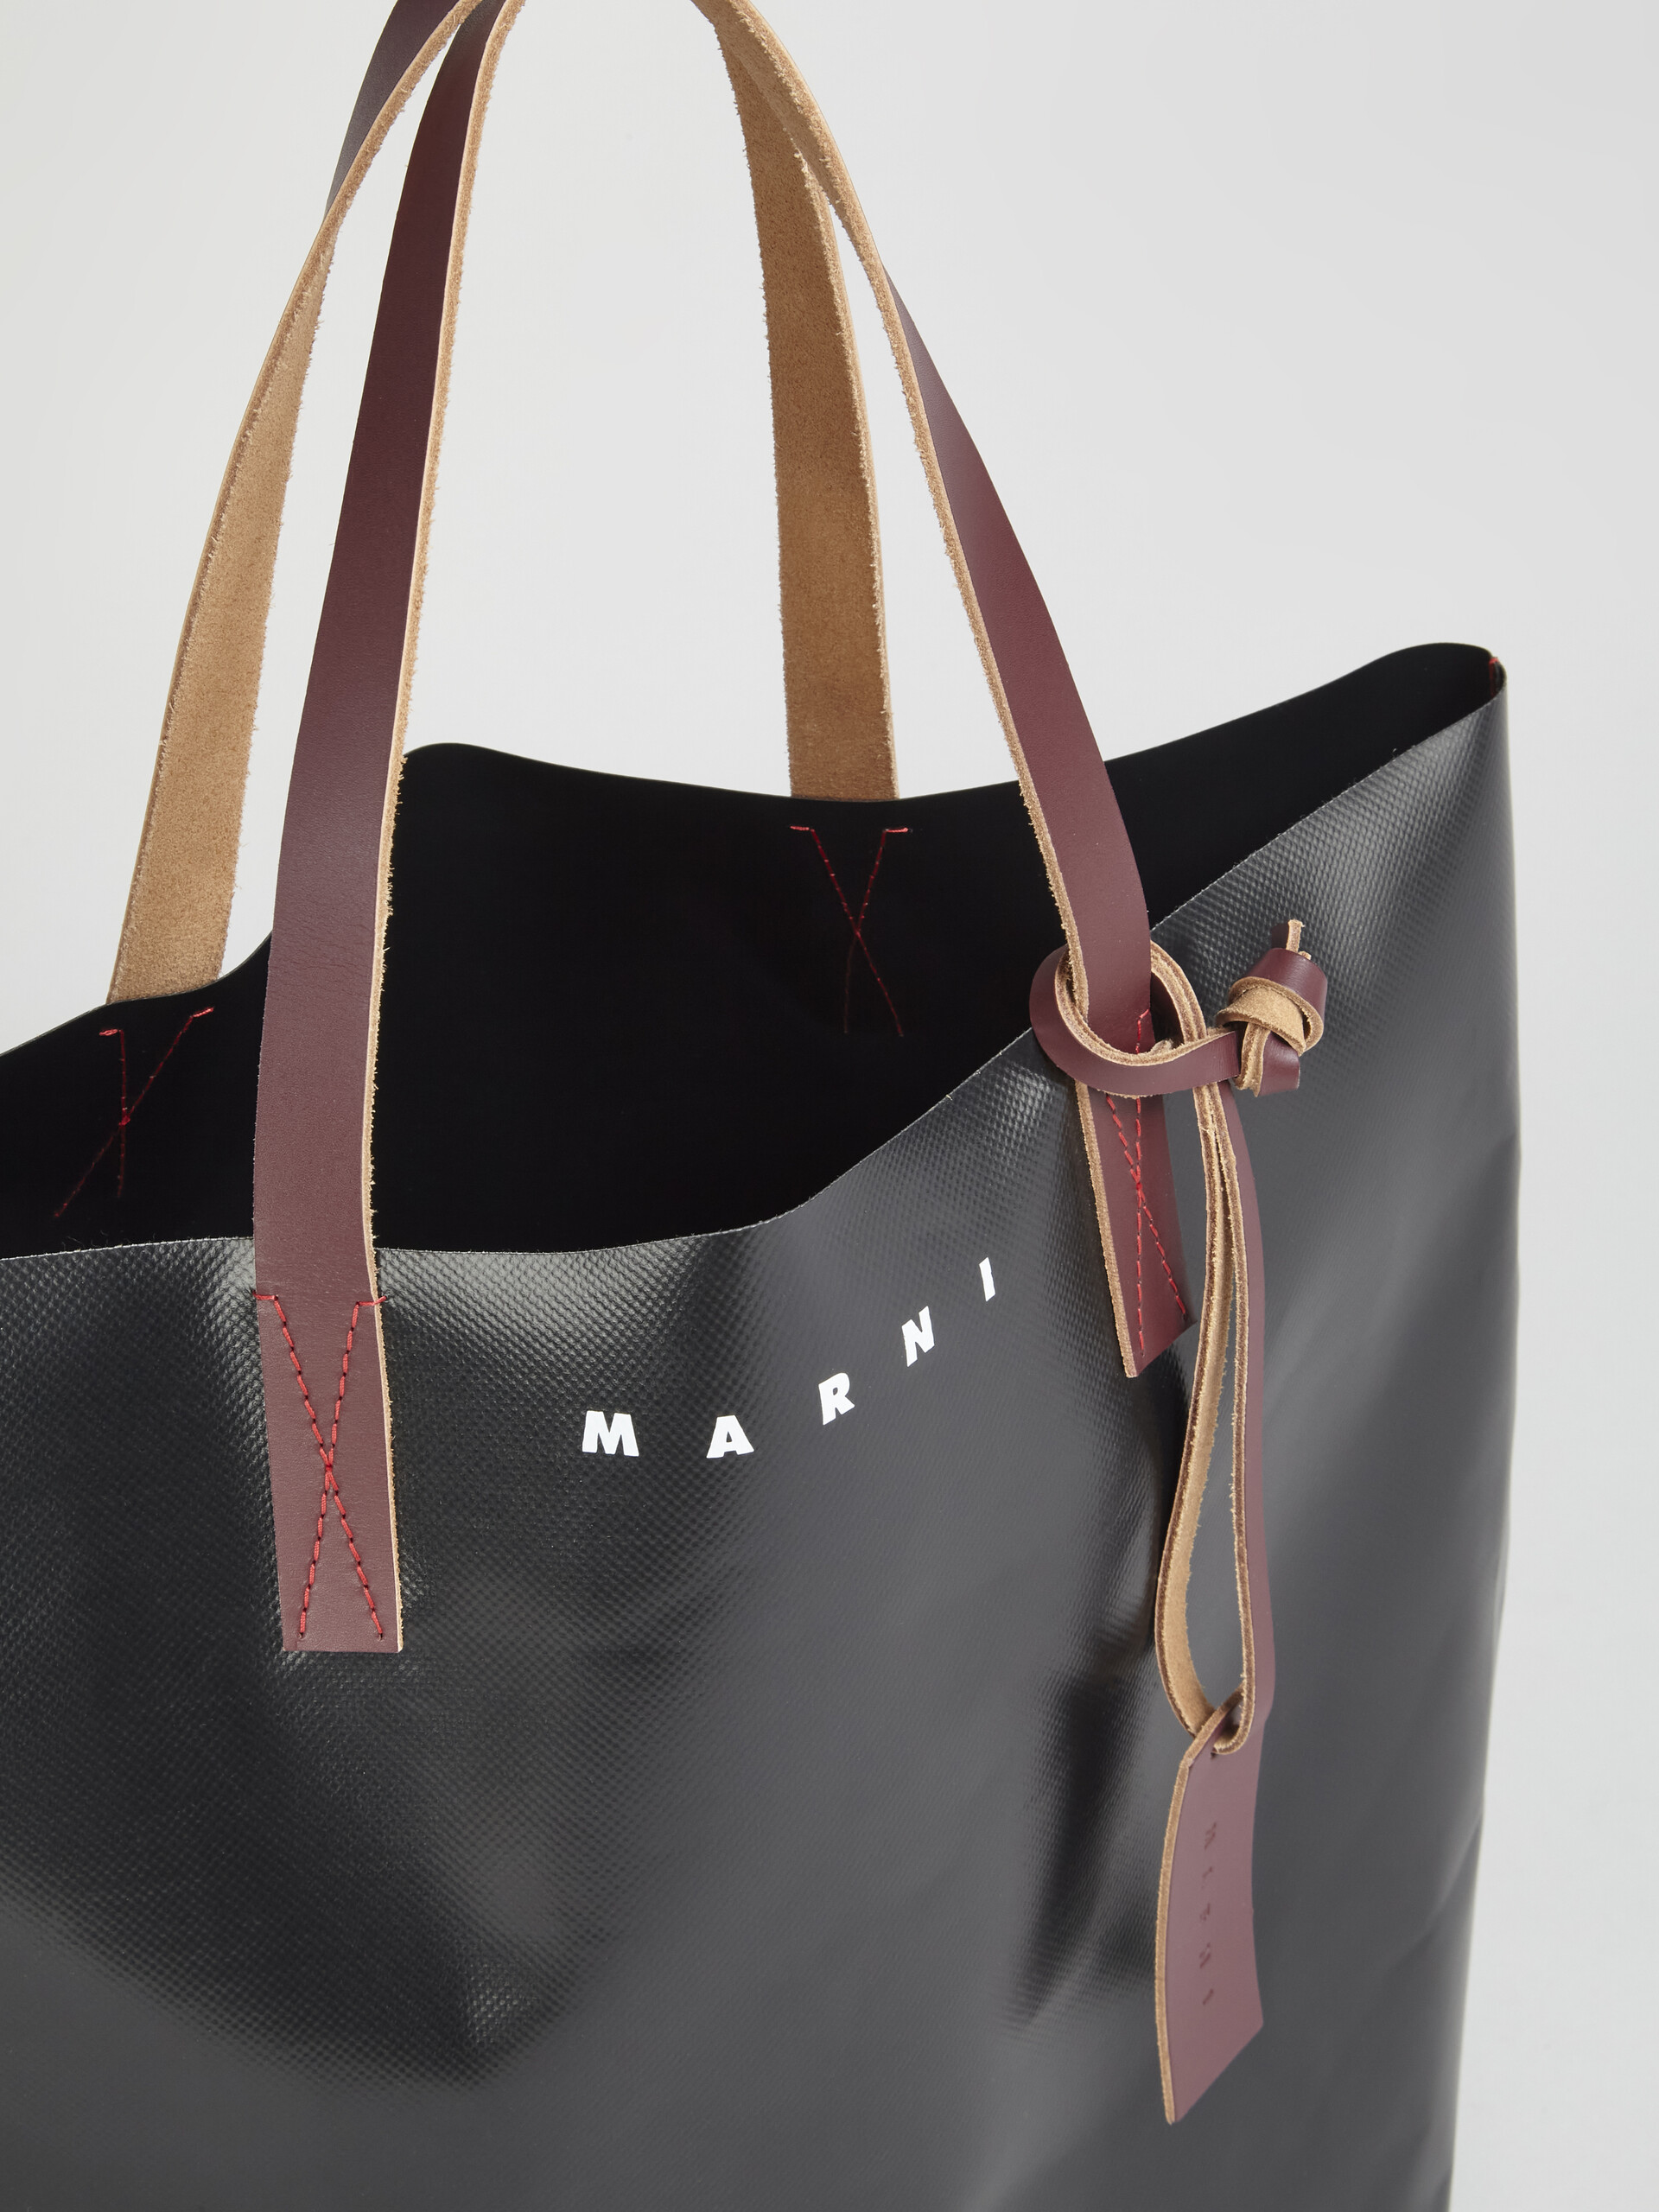 TRIBECA SHOPPING BAG | Marni